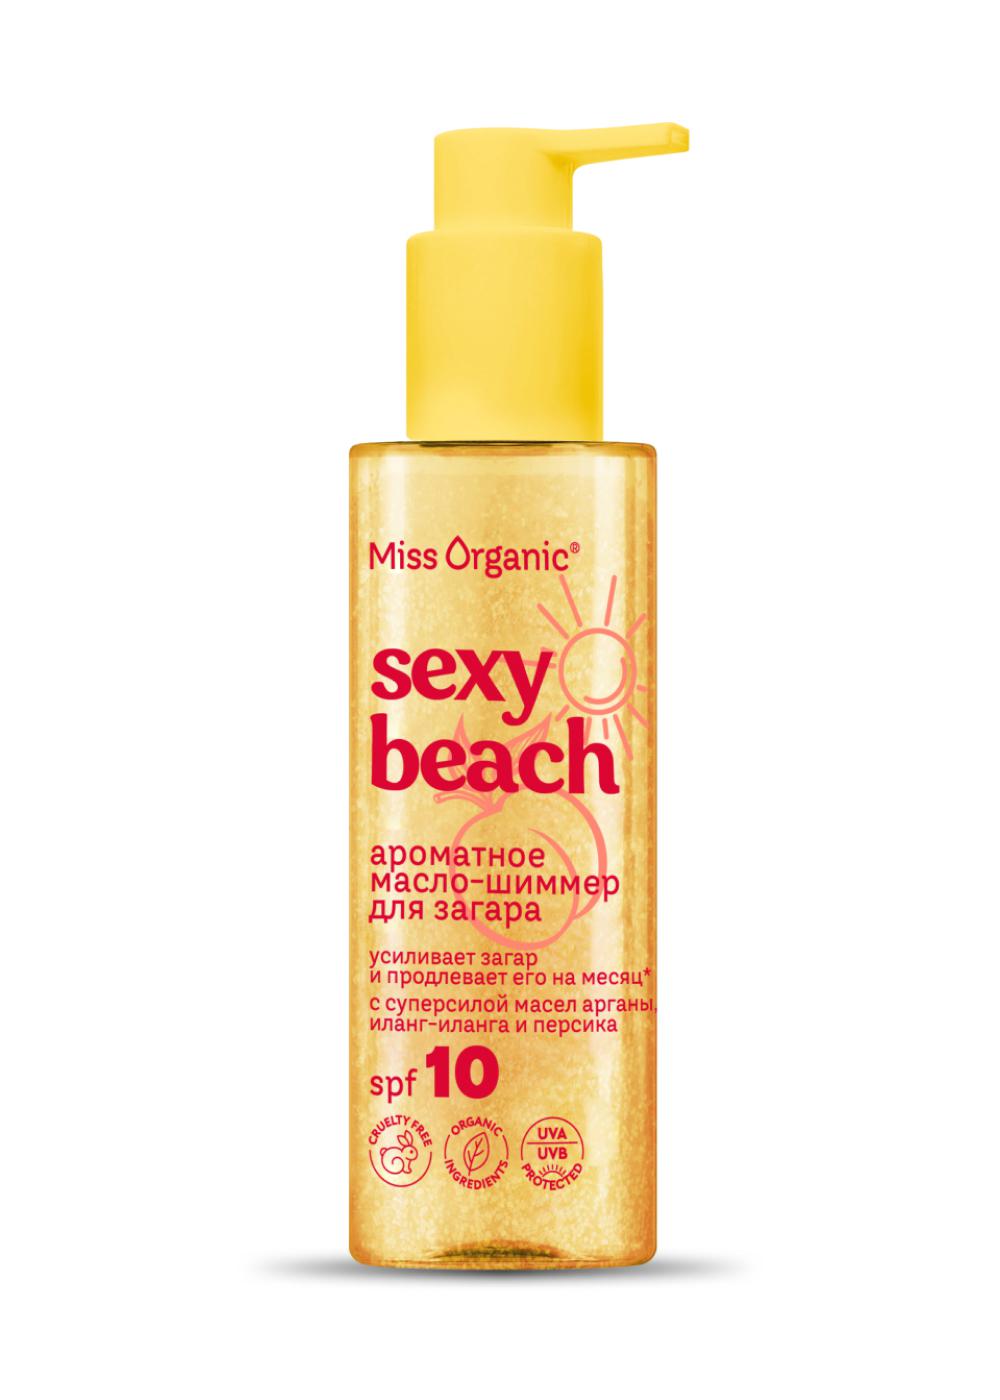 Масло-шиммер для загара ароматное Sexy Beach SPF 10, Miss Organic, 184 руб. (&laquo;Глобус&raquo;)